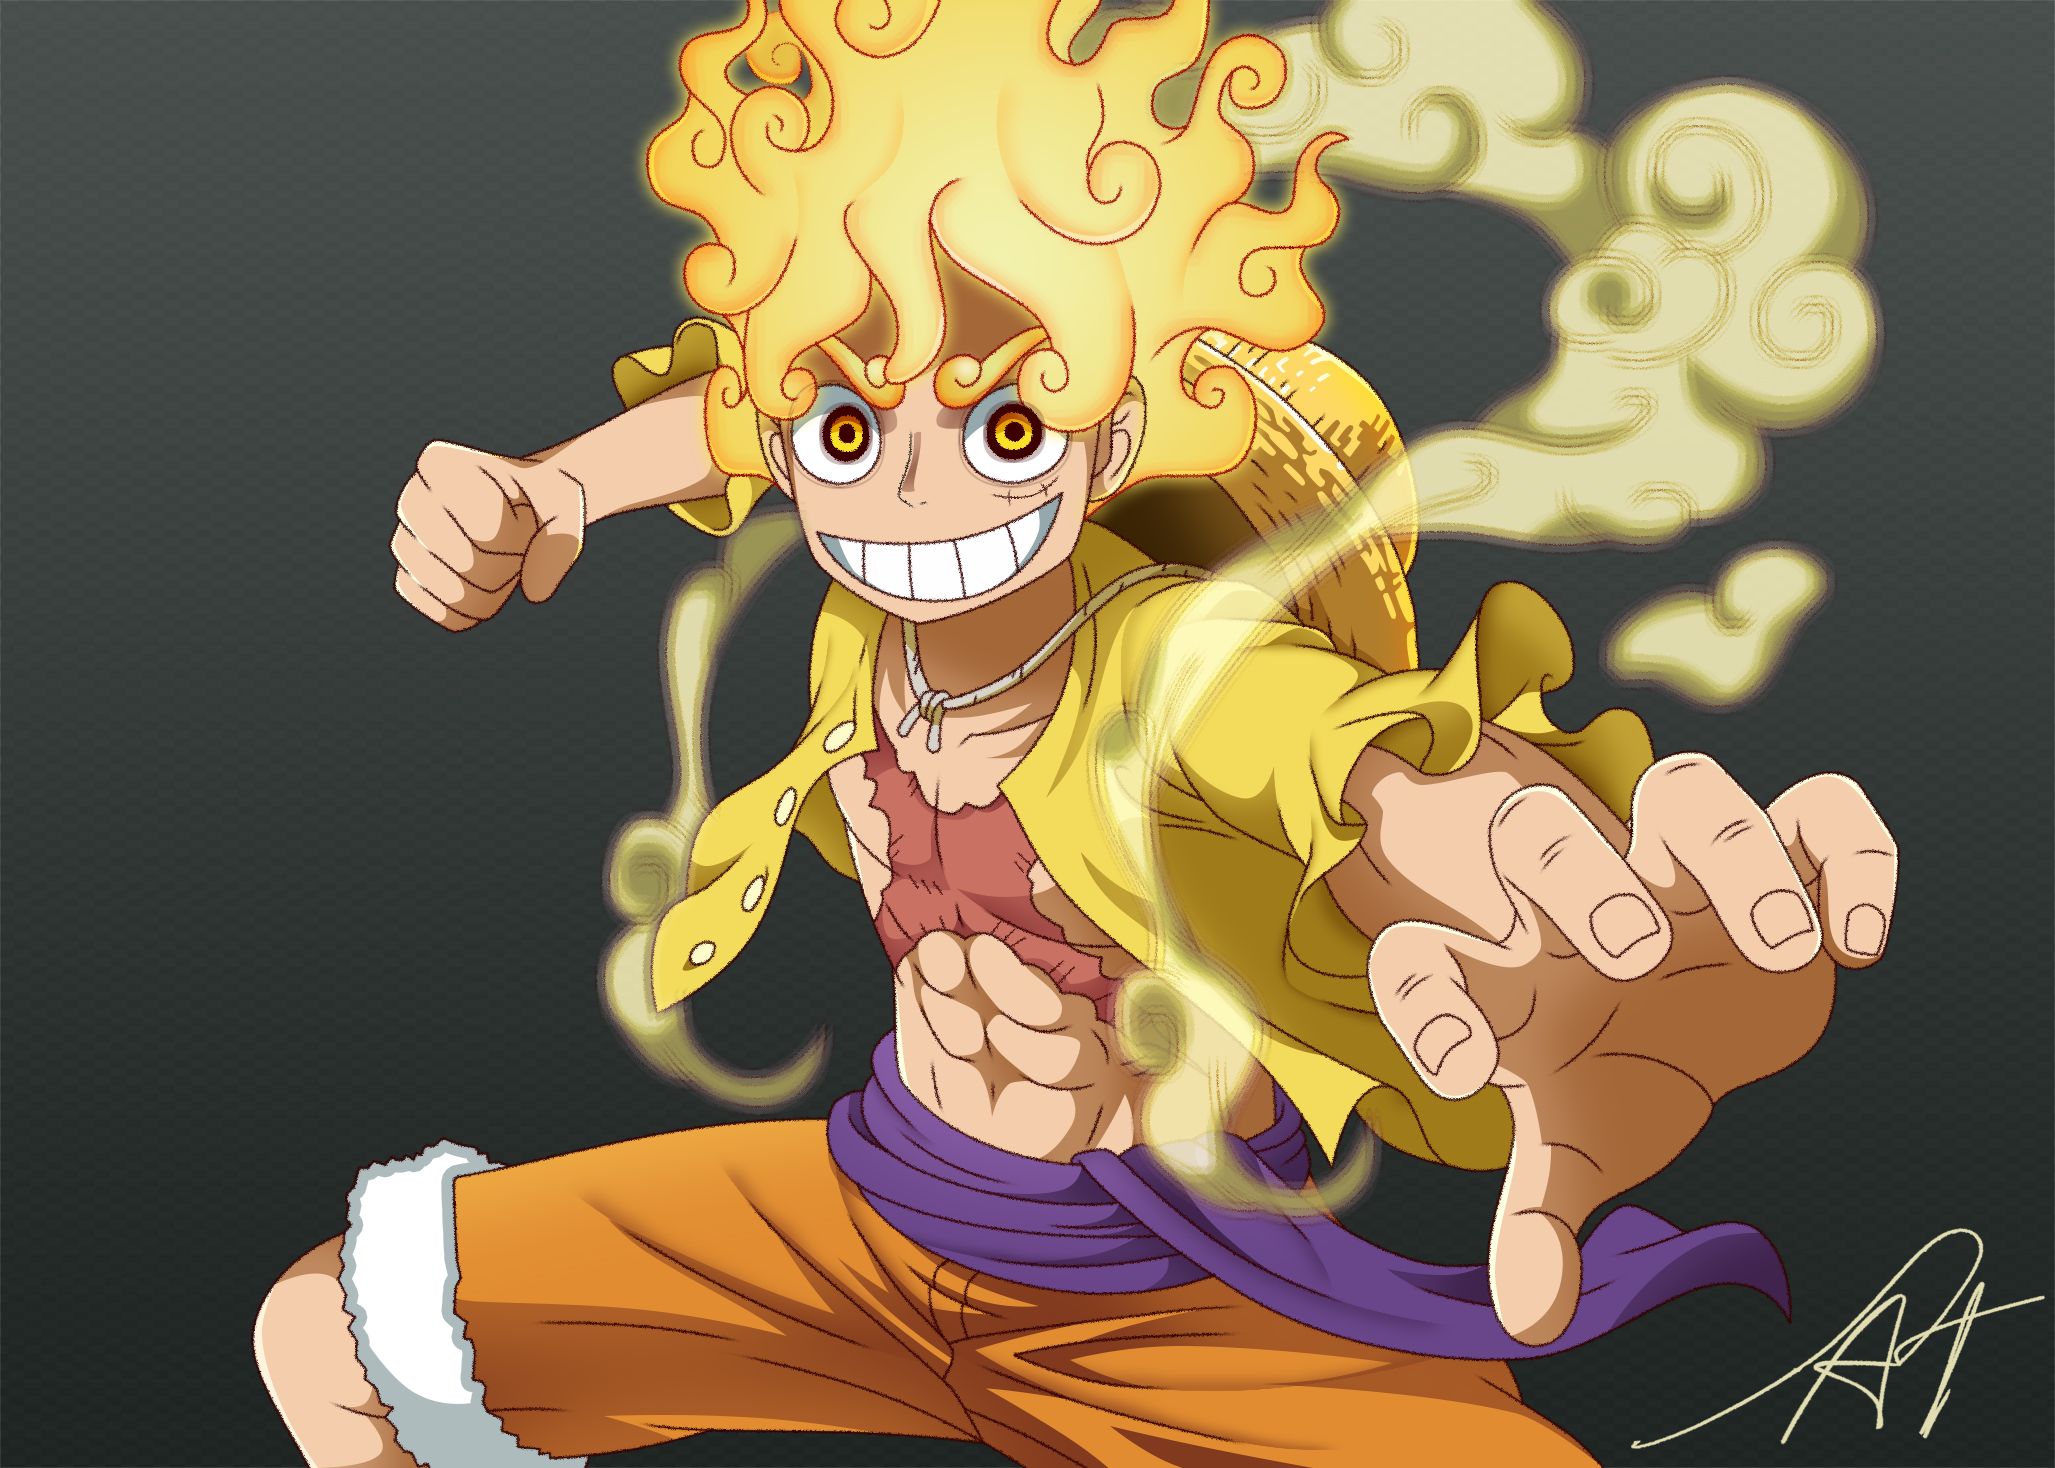 HD desktop wallpaper: Anime, One Piece, Monkey D Luffy, Gear 5 (One Piece) download free picture